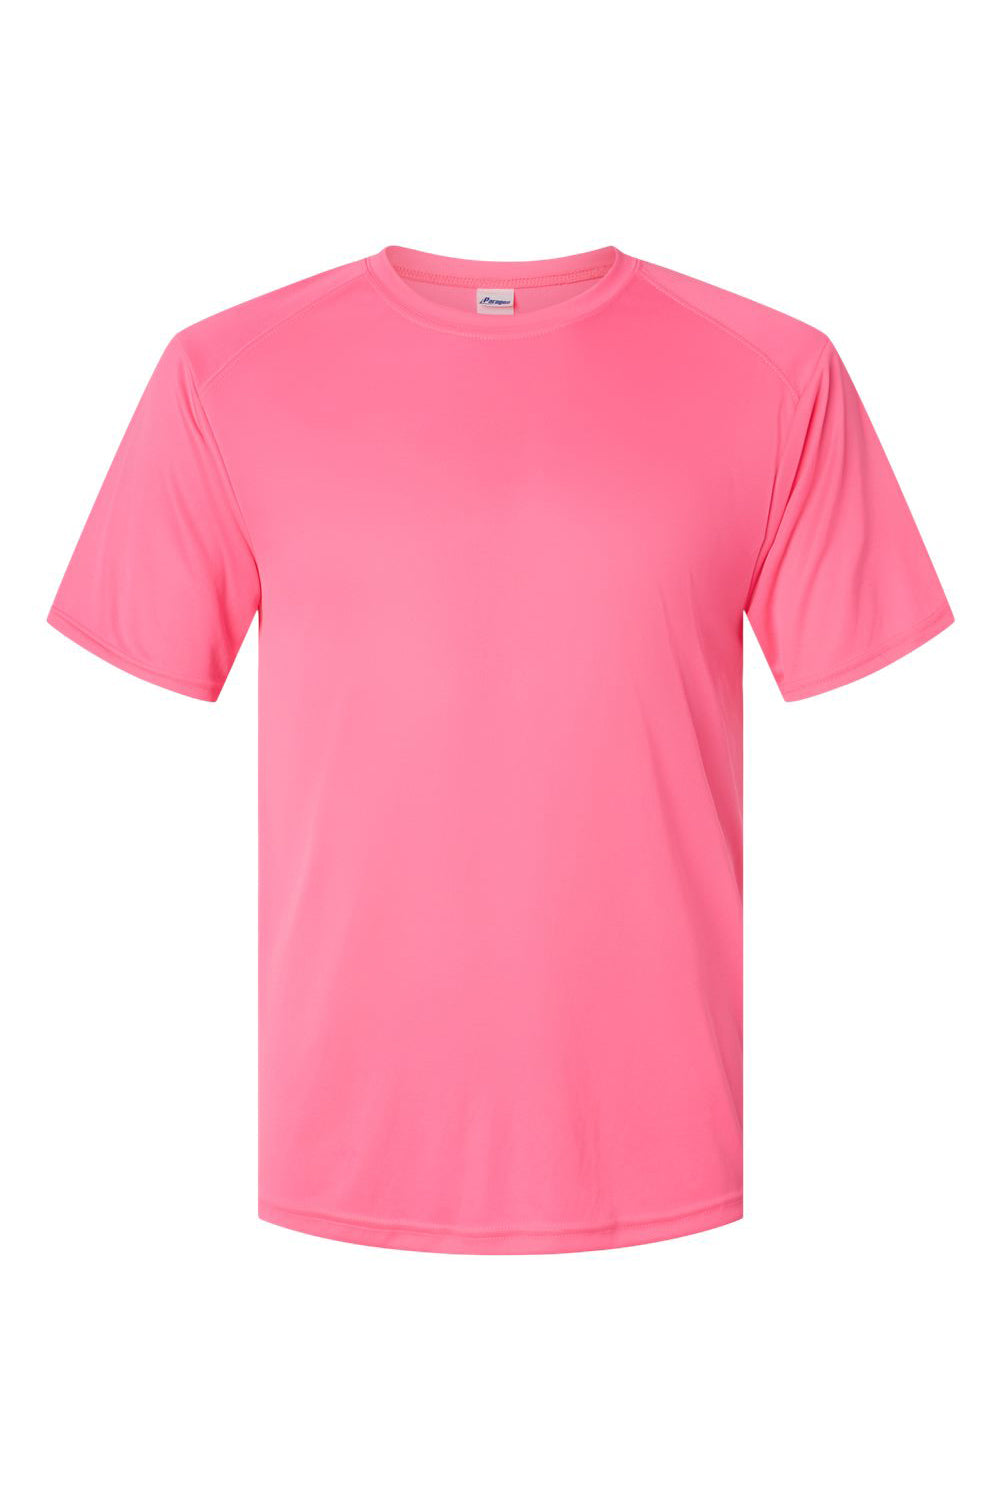 Paragon 200 Mens Islander Performance Short Sleeve Crewneck T-Shirt Neon Pink Flat Front